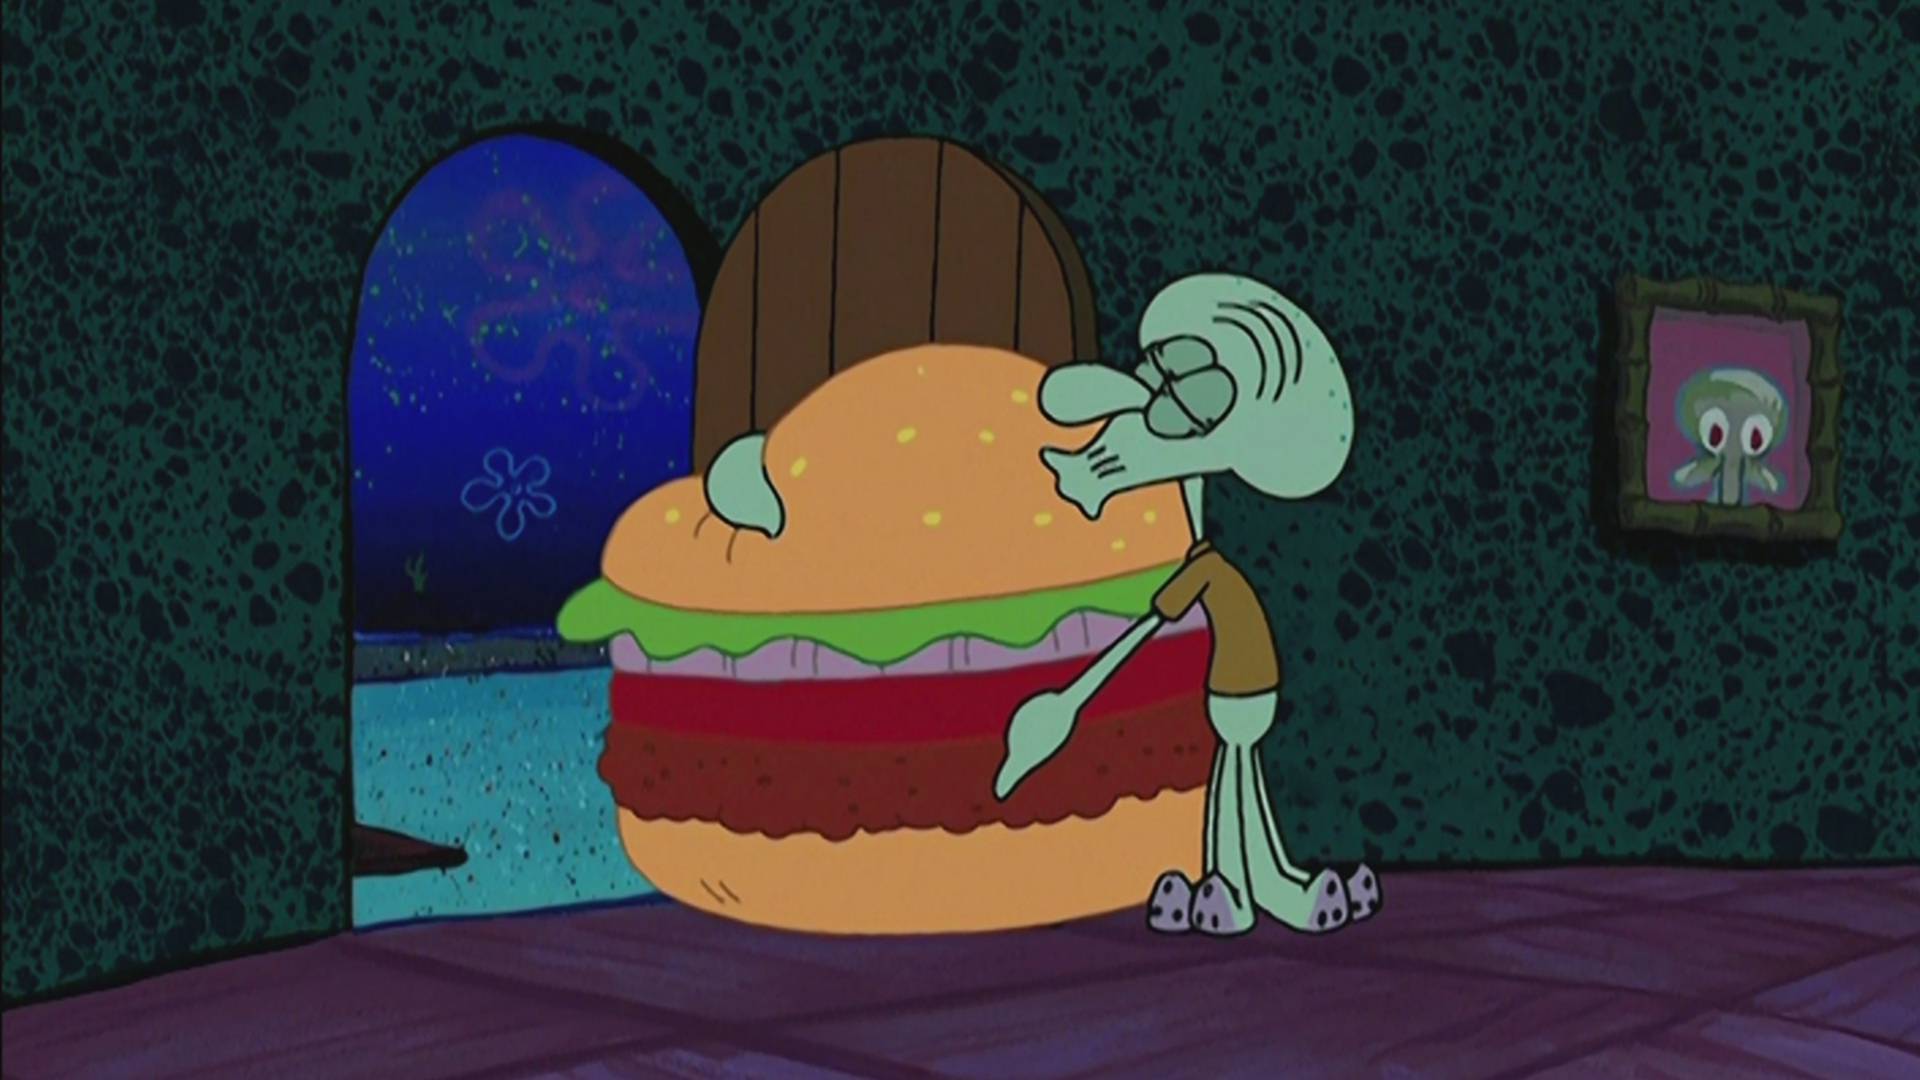 patrick eating sandwich